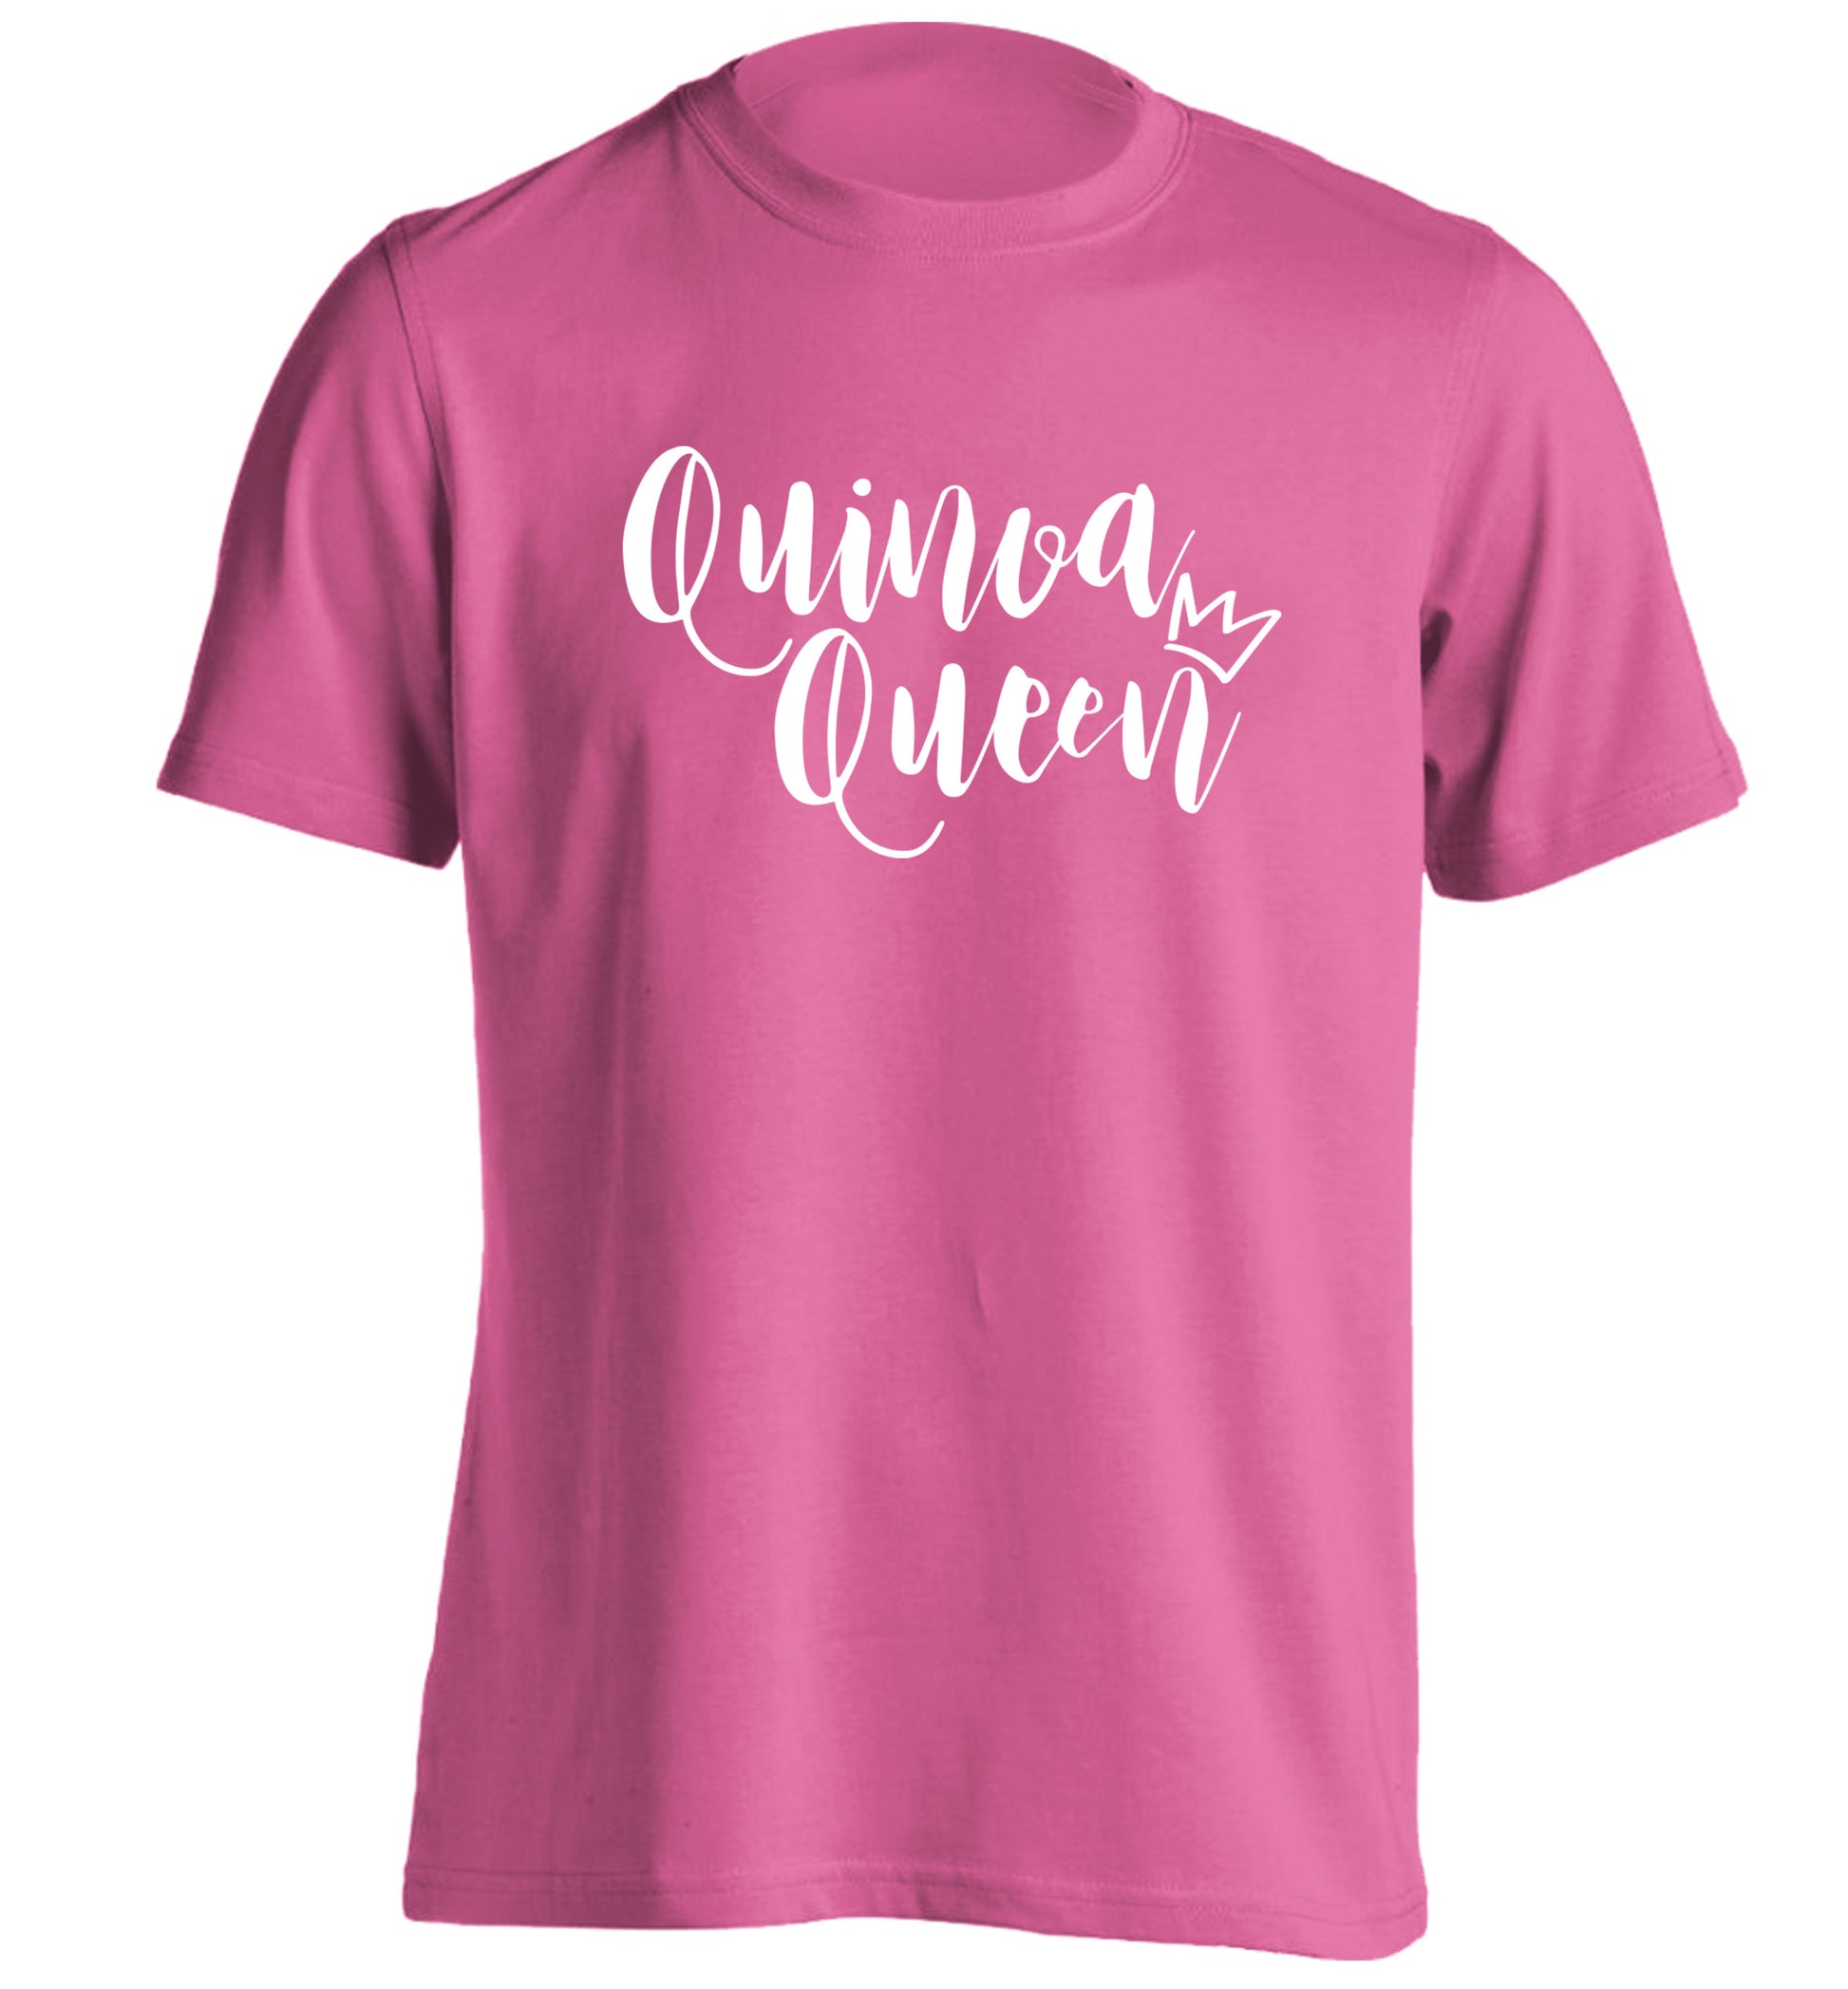 Quinoa Queen adults unisex pink Tshirt 2XL